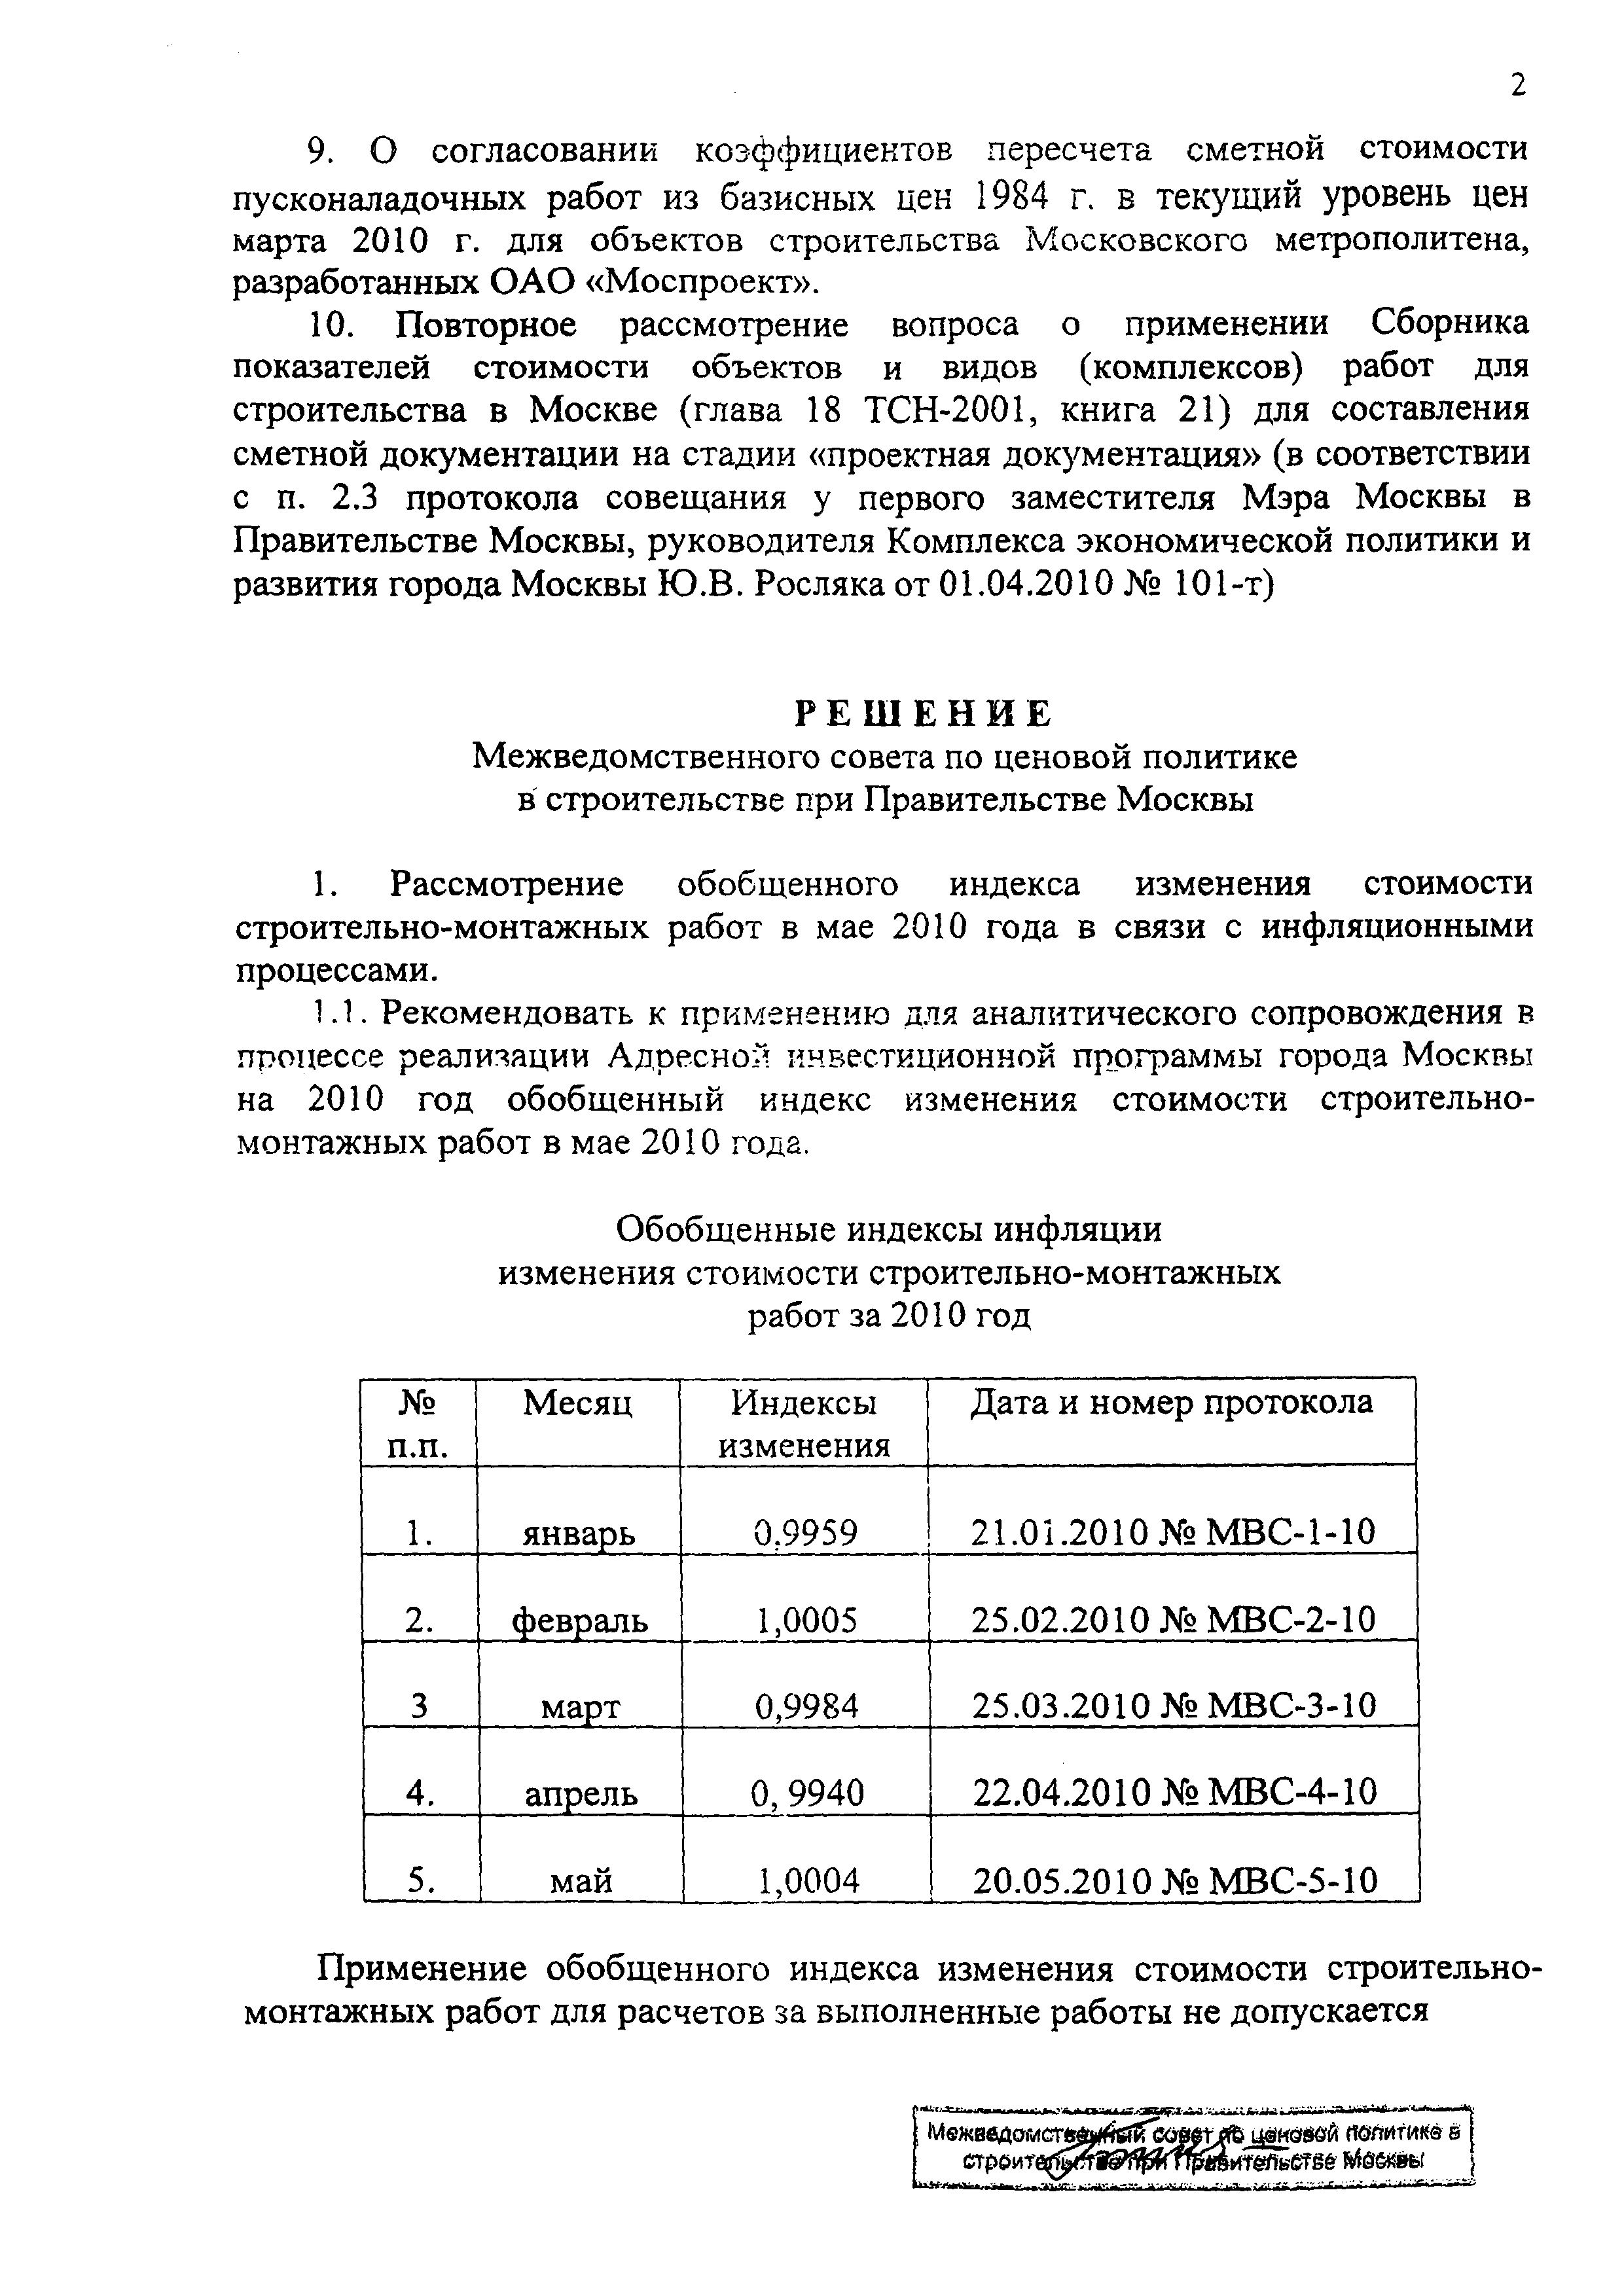 Протокол МВС-5-10